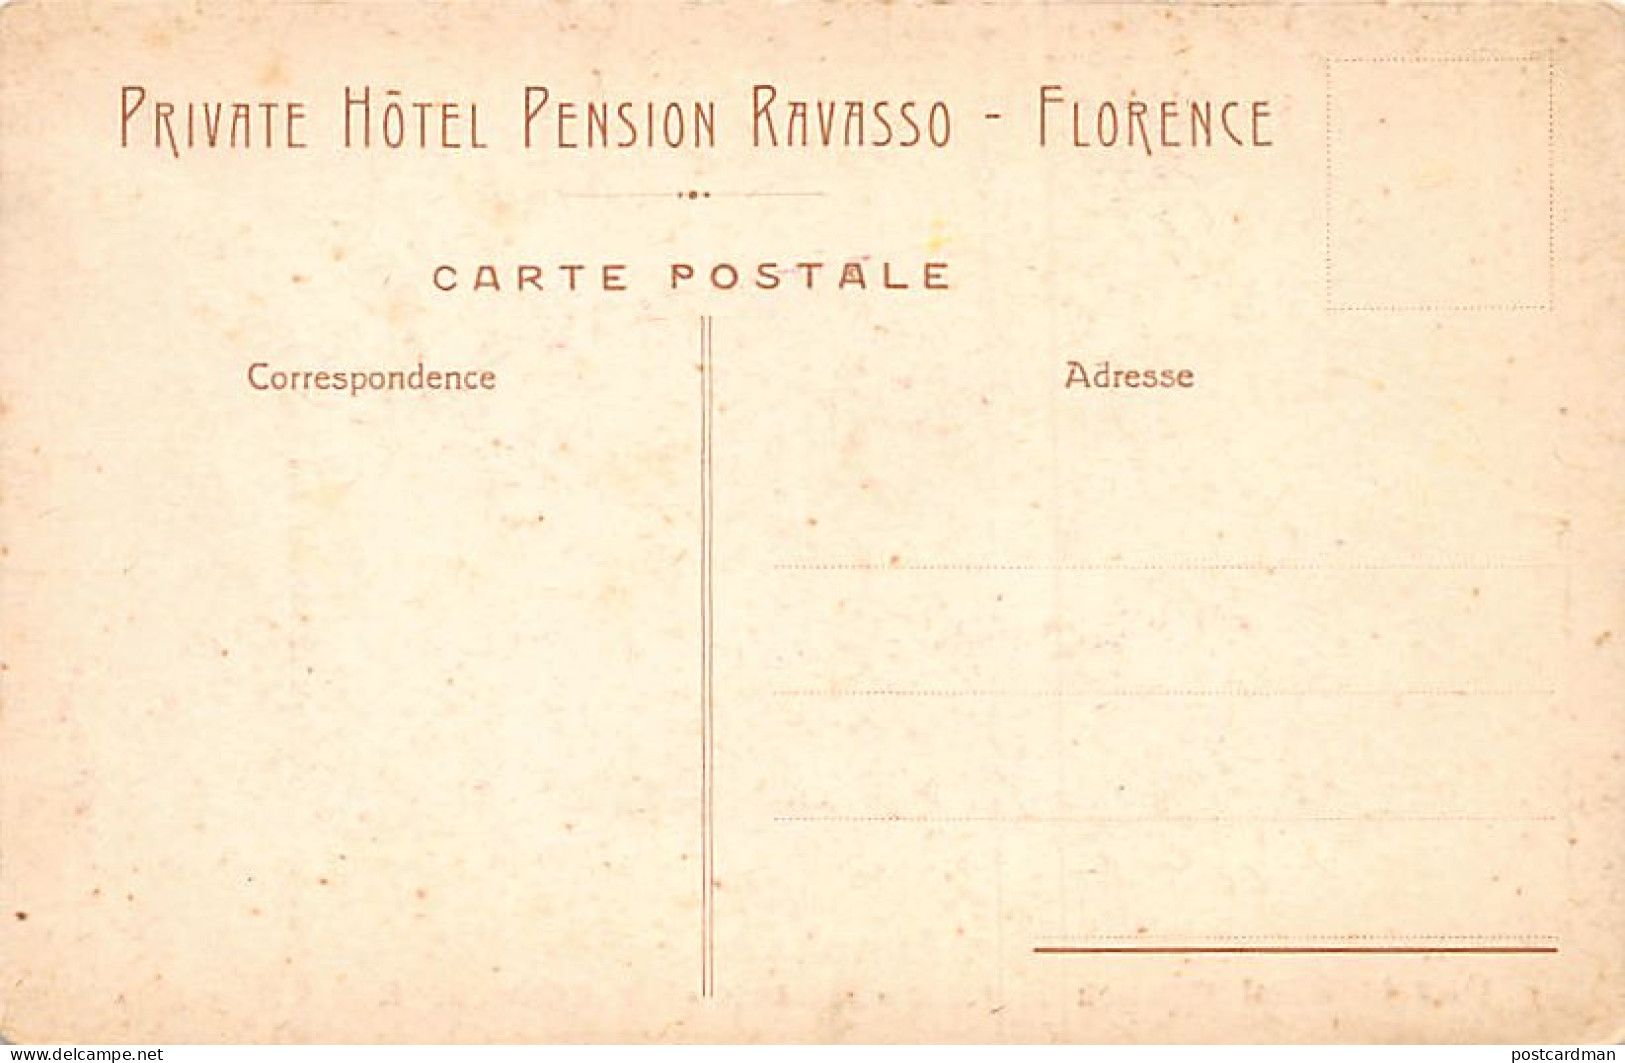 FIRENZE - Private Hotel Pension Ravasso - Via Curtatone 1 - Firenze (Florence)